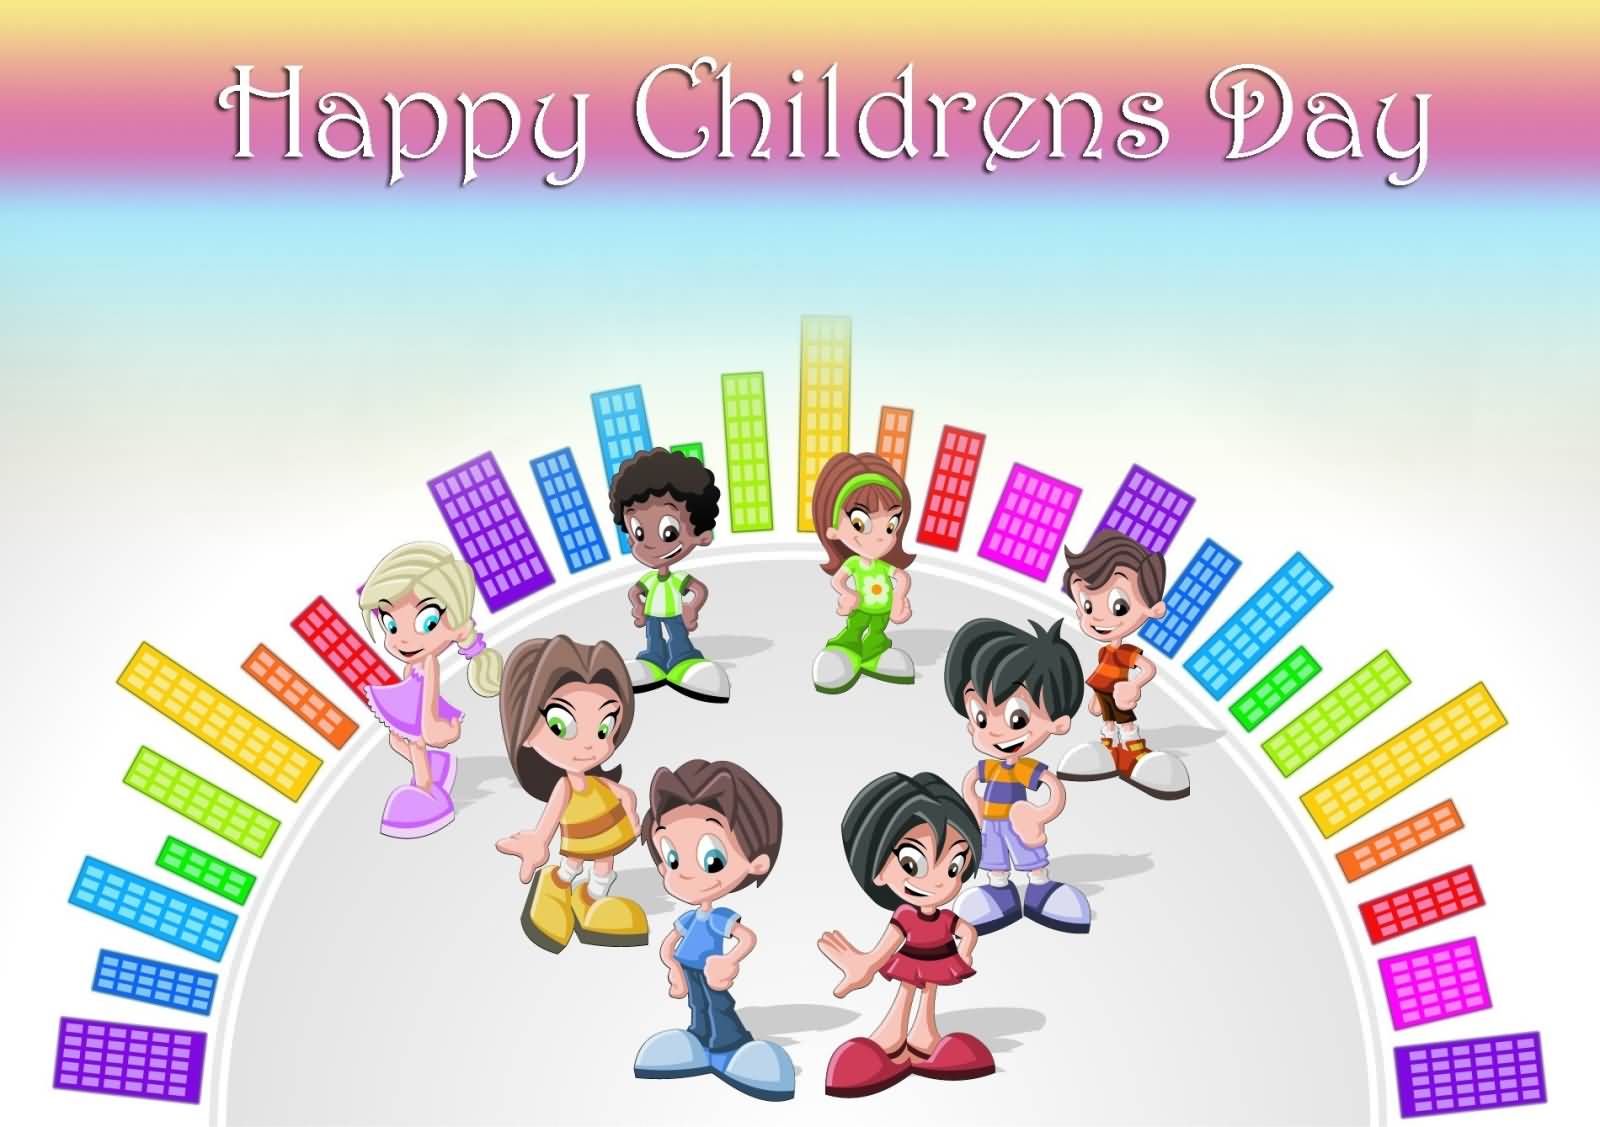 Happy Children's Day Wishes Wallpaper Image